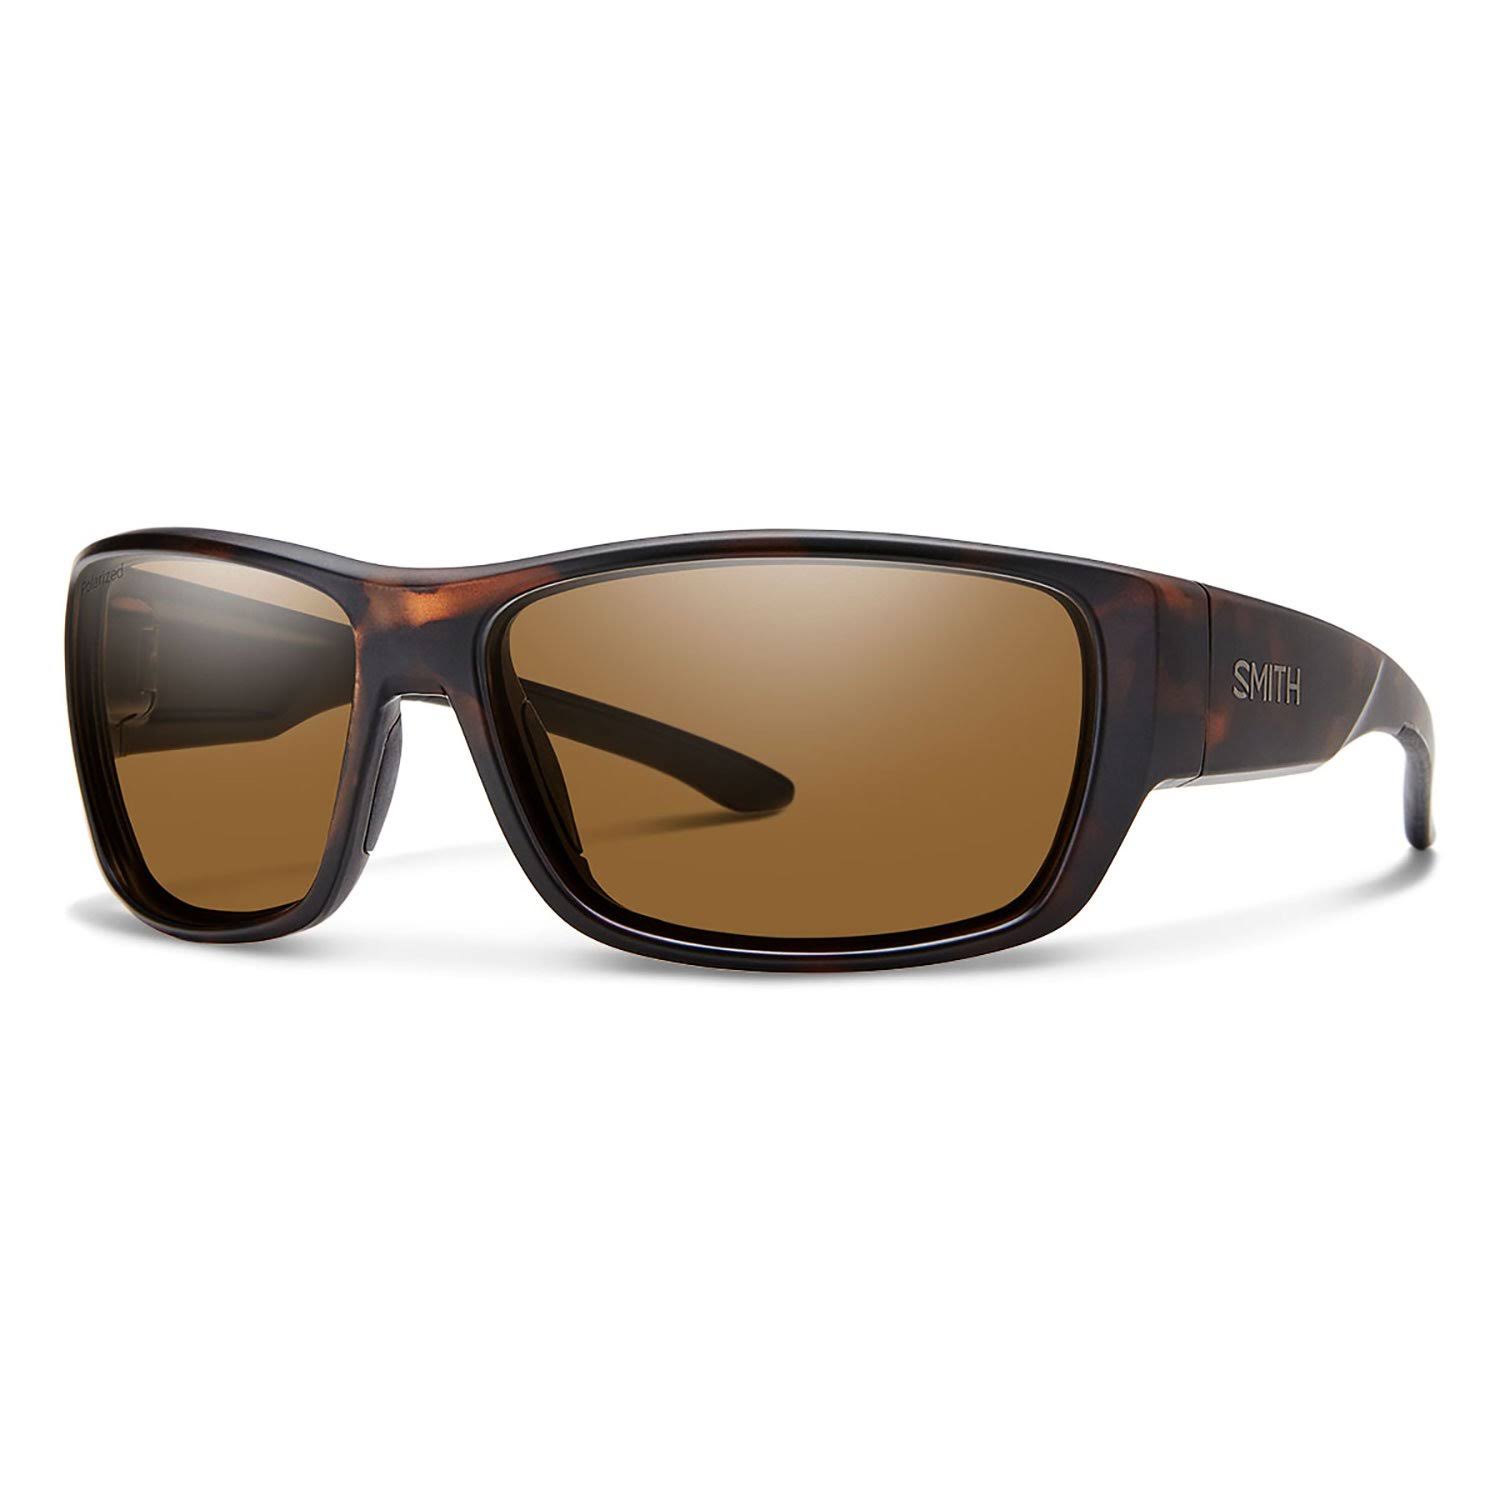 Smith Men's Forge Sunglasses - Matte Tortoise/Polarized Brown